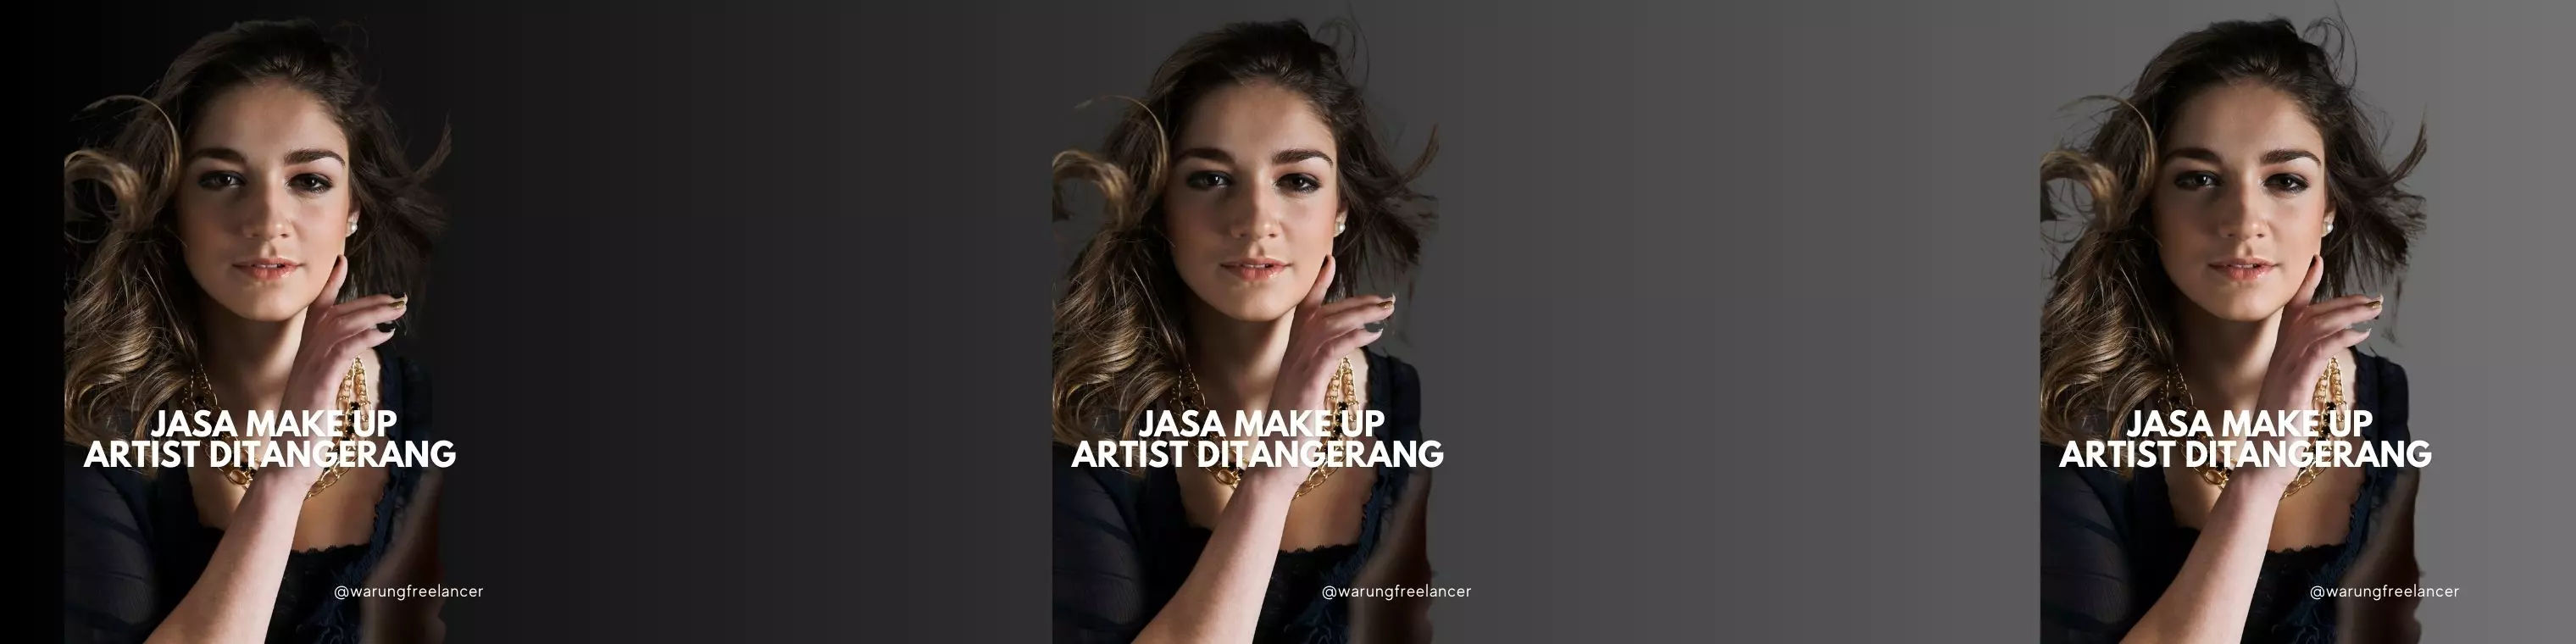 Jasa Make Up Artist Tangerang